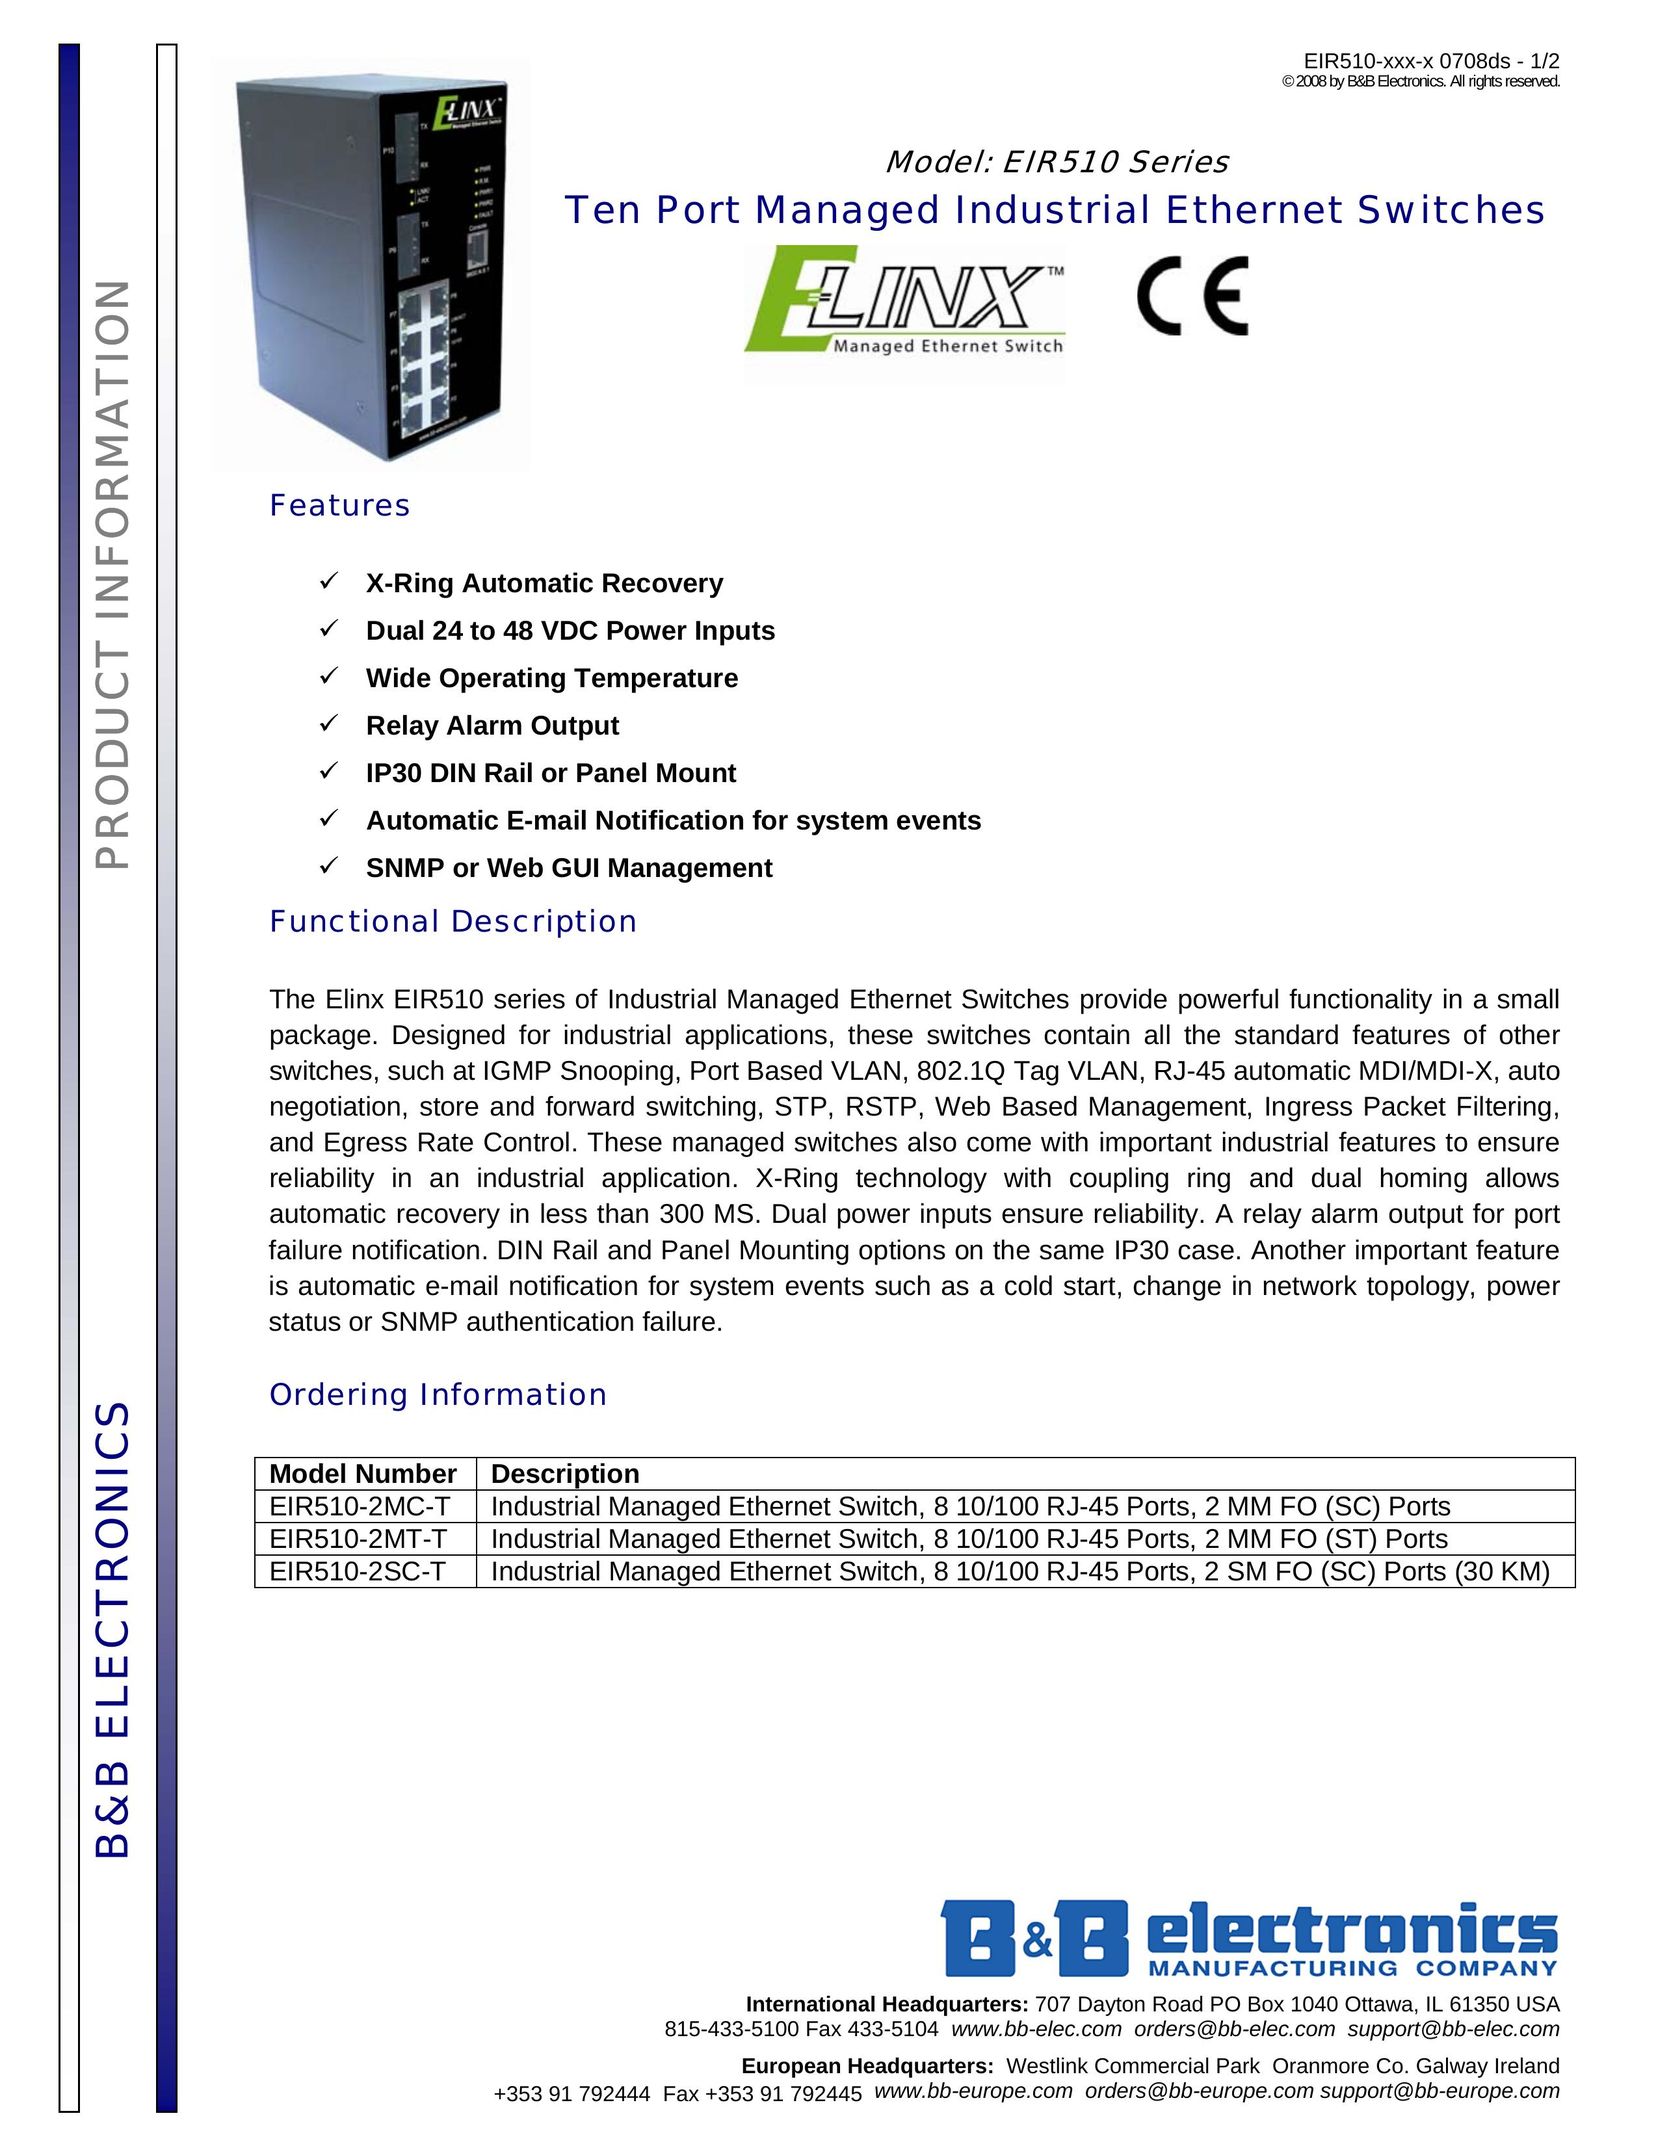 B&B Electronics EIR510-2MT-T Switch User Manual